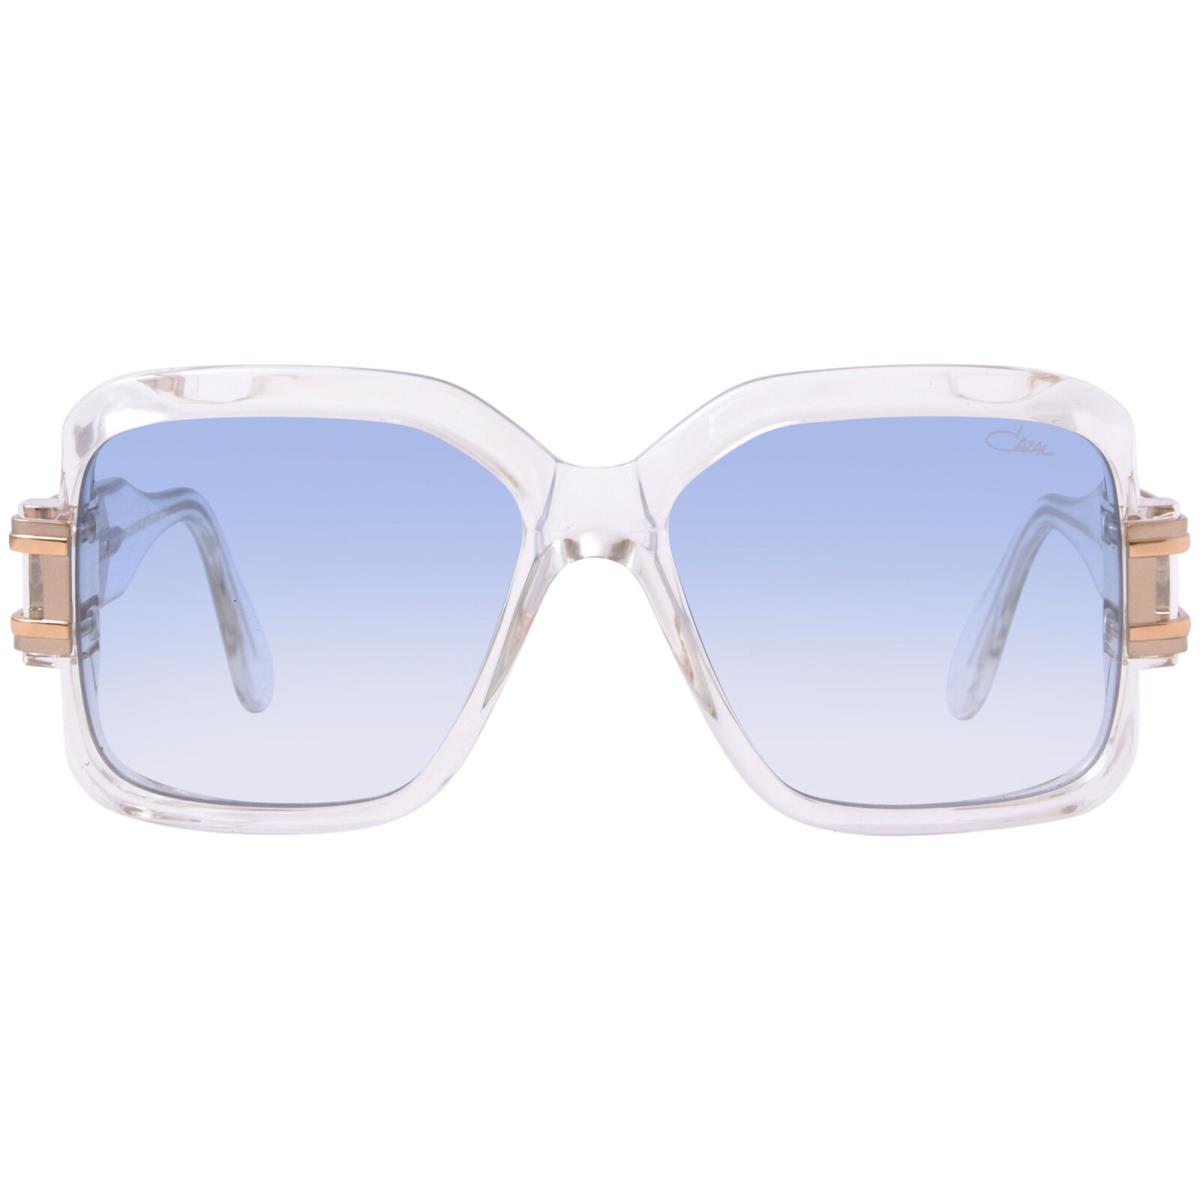 Cazal Legends 623 065SG Transparent/gold Full Rim Fashion Retro Sunglasses 57mm